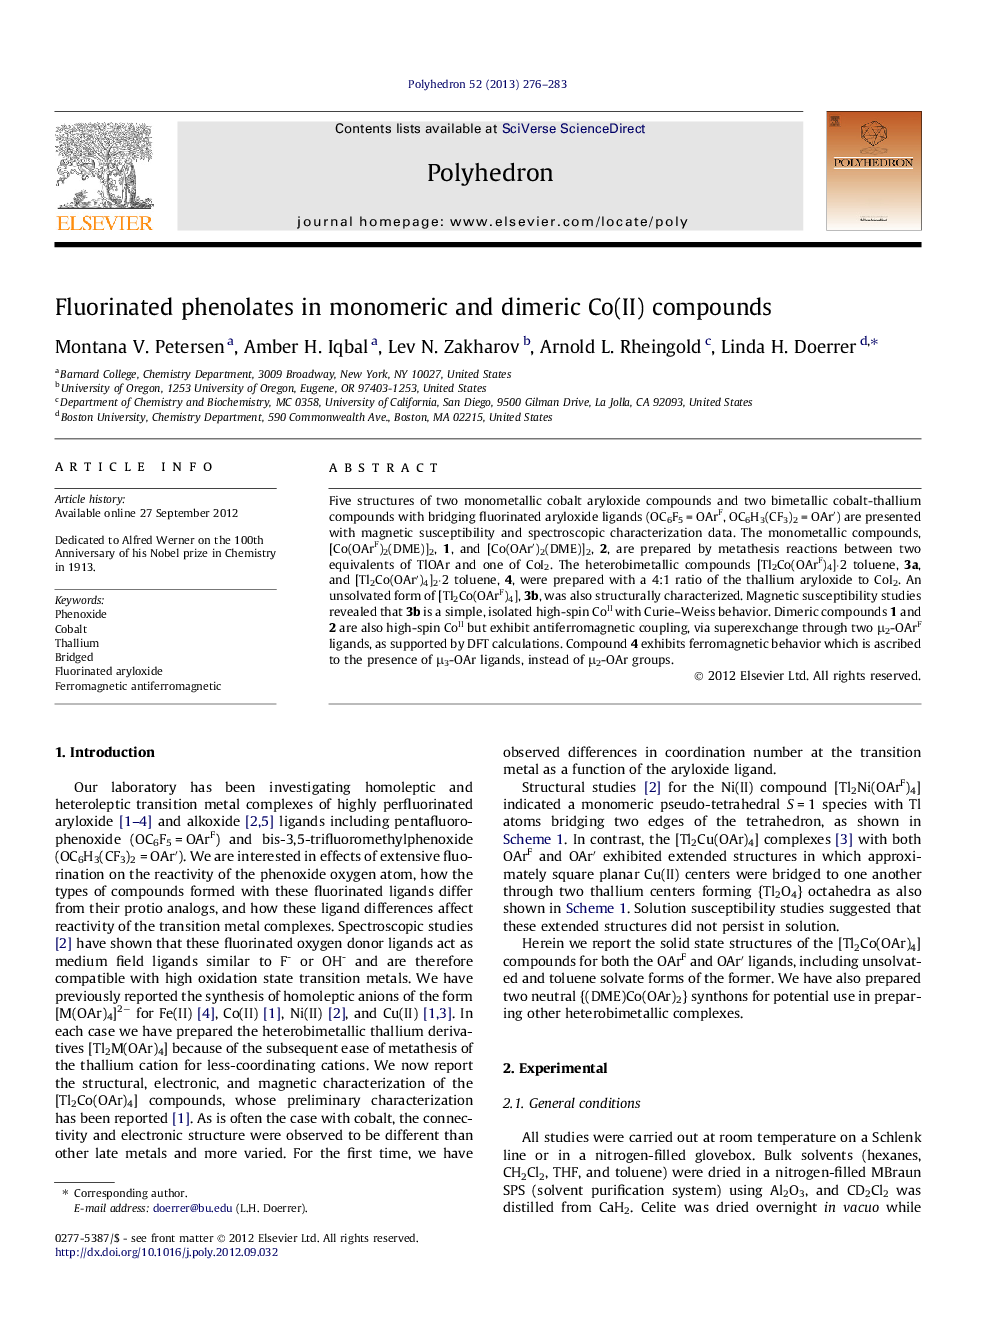 Fluorinated phenolates in monomeric and dimeric Co(II) compounds